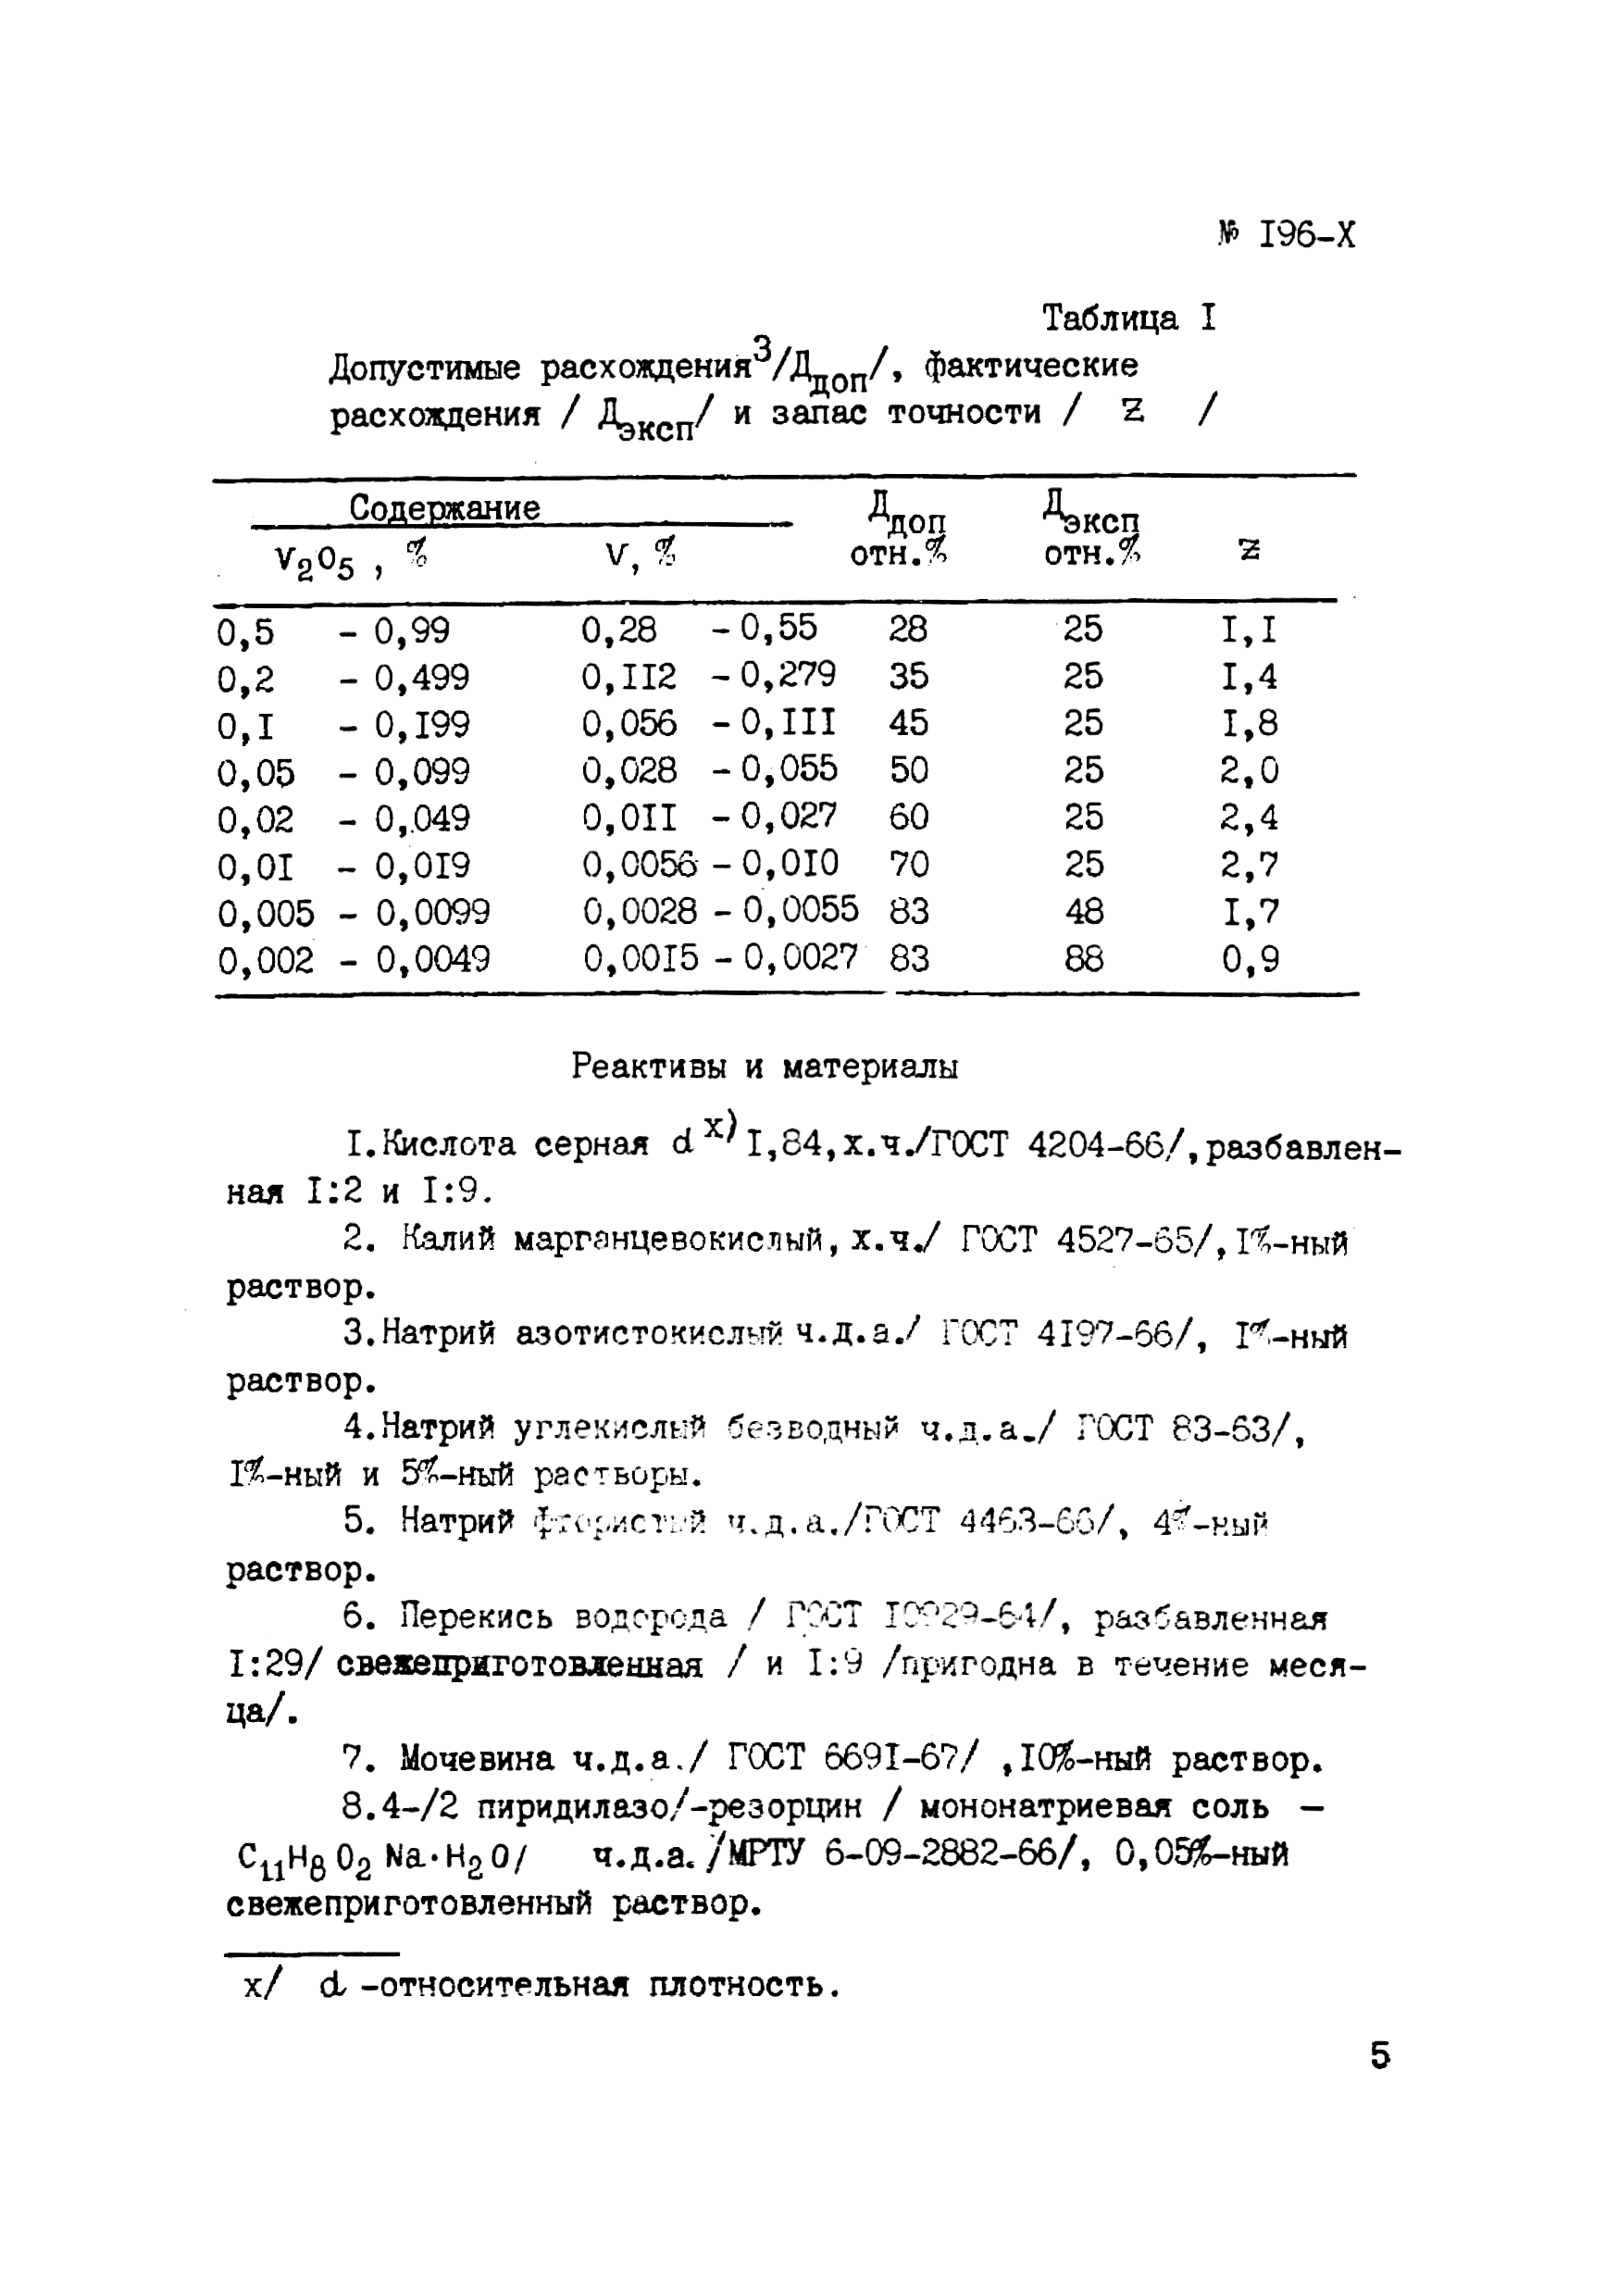 Инструкция НСАМ 196-Х